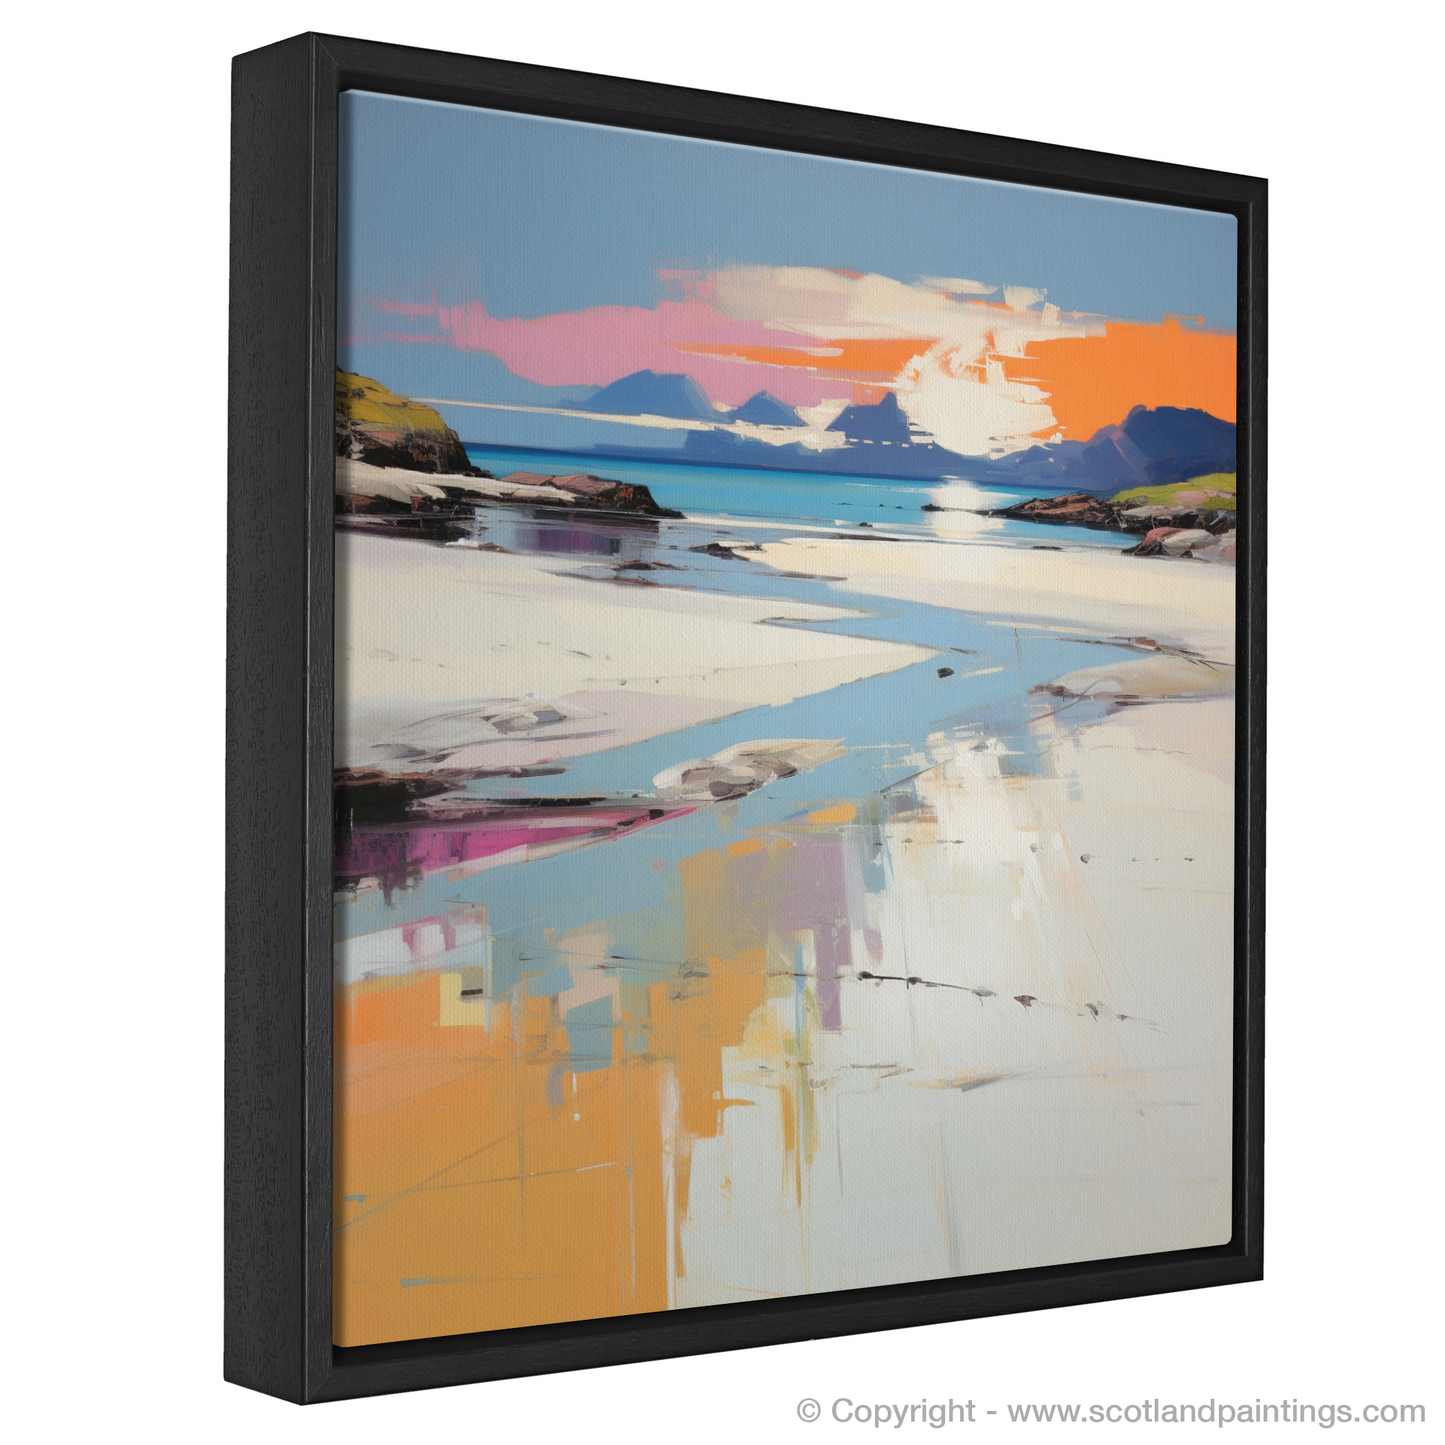 Painting and Art Print of Camusdarach Beach, Arisaig entitled "Camusdarach Beach Serenade: A Contemporary Homage to Scottish Shores".